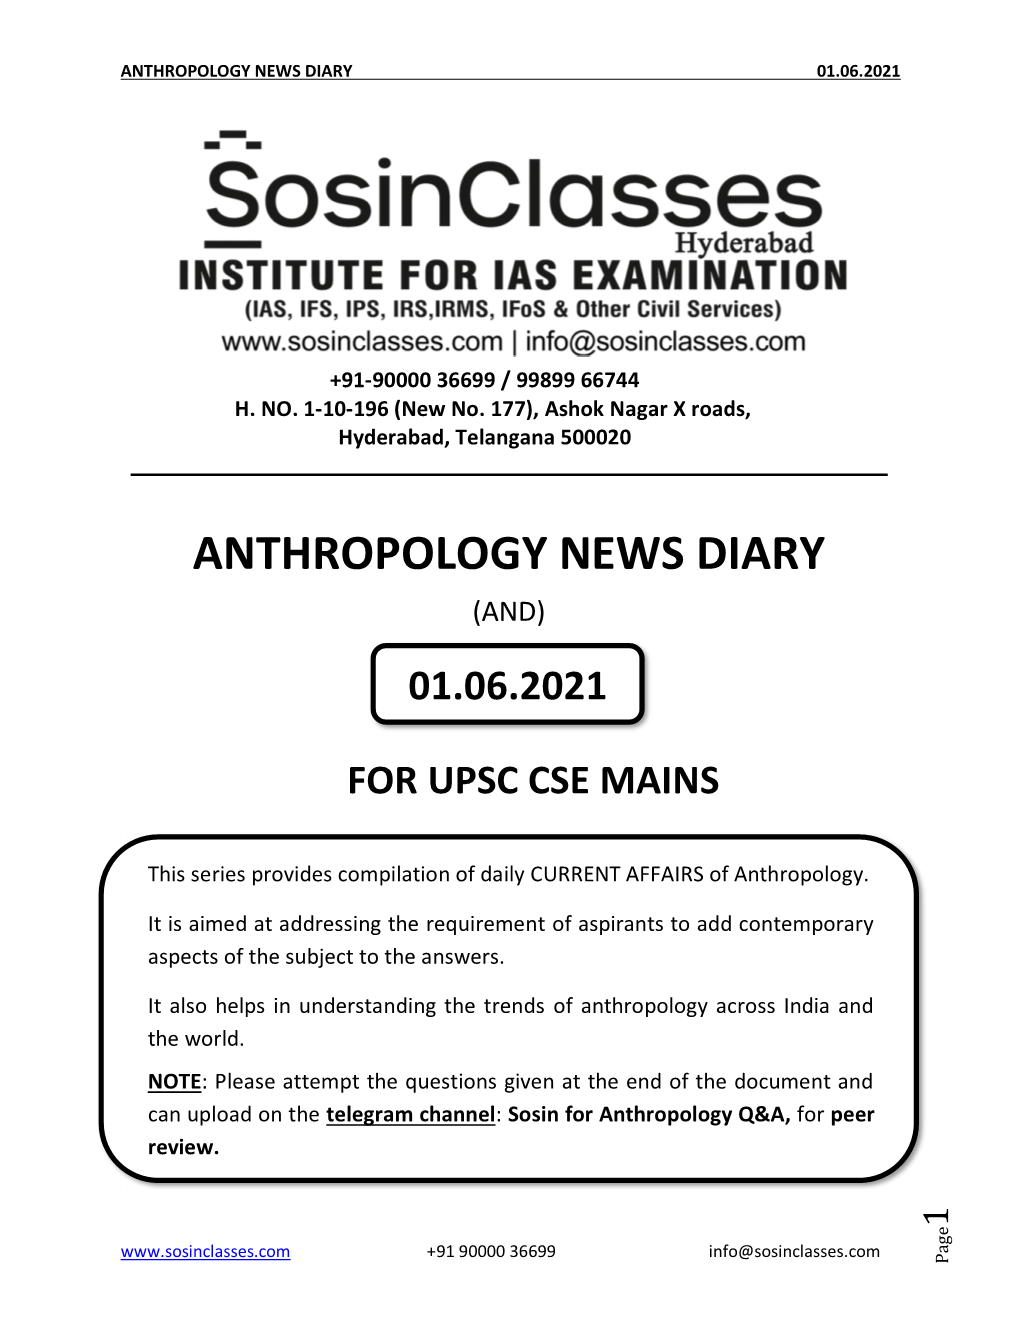 Anthropology News Diary 01.06.2021